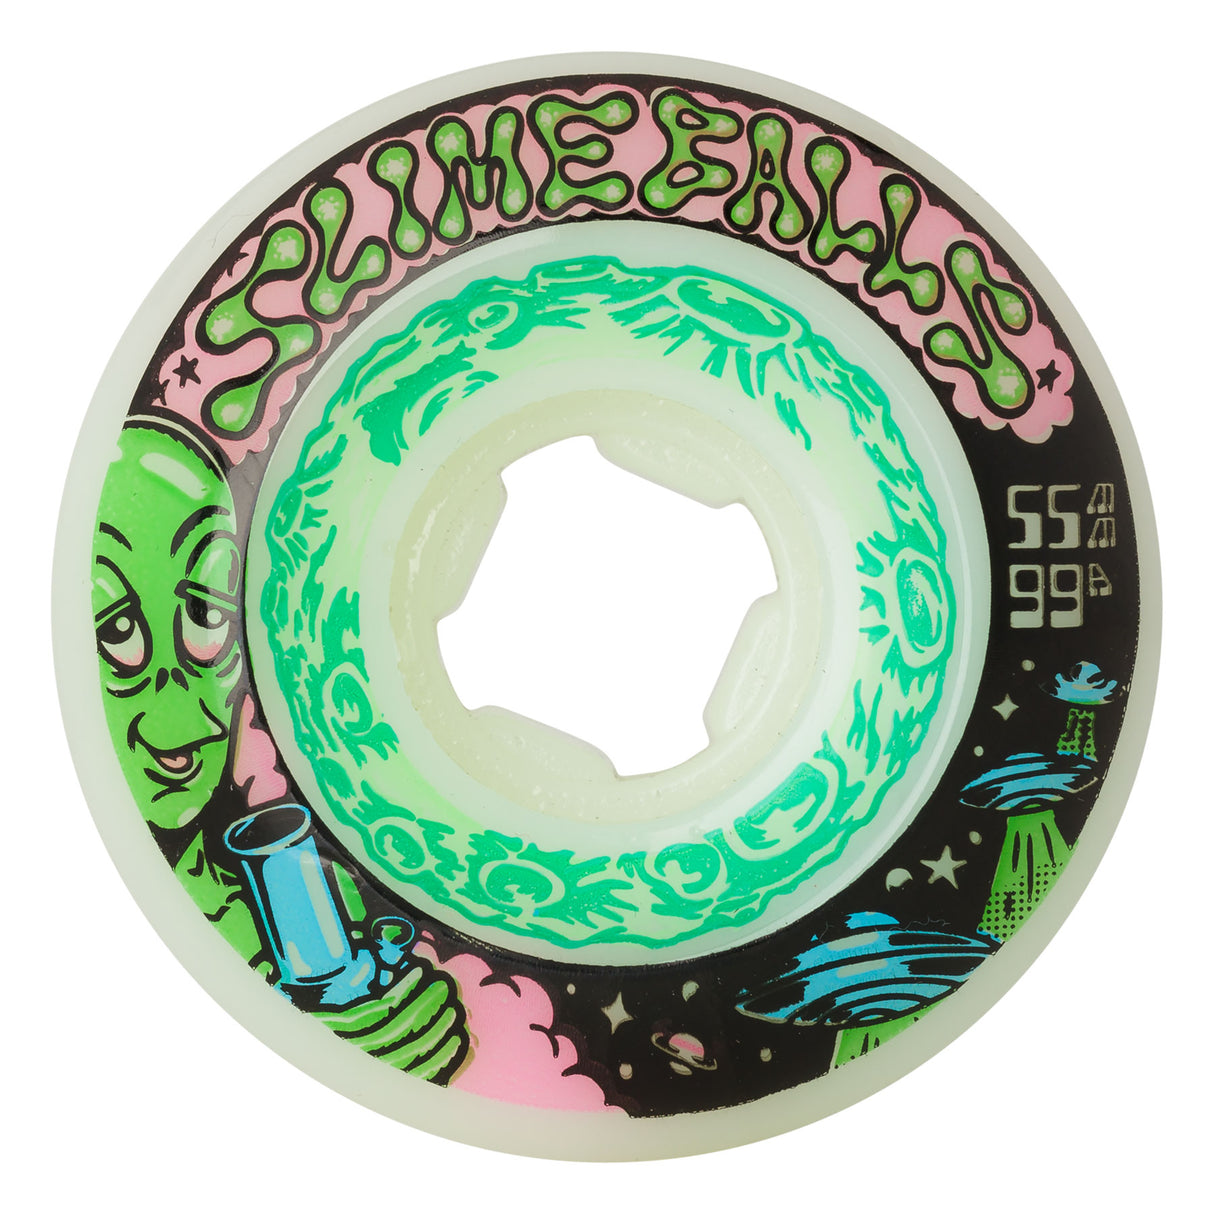 Slime Balls Alien Saucers 55mm 99a Wheels